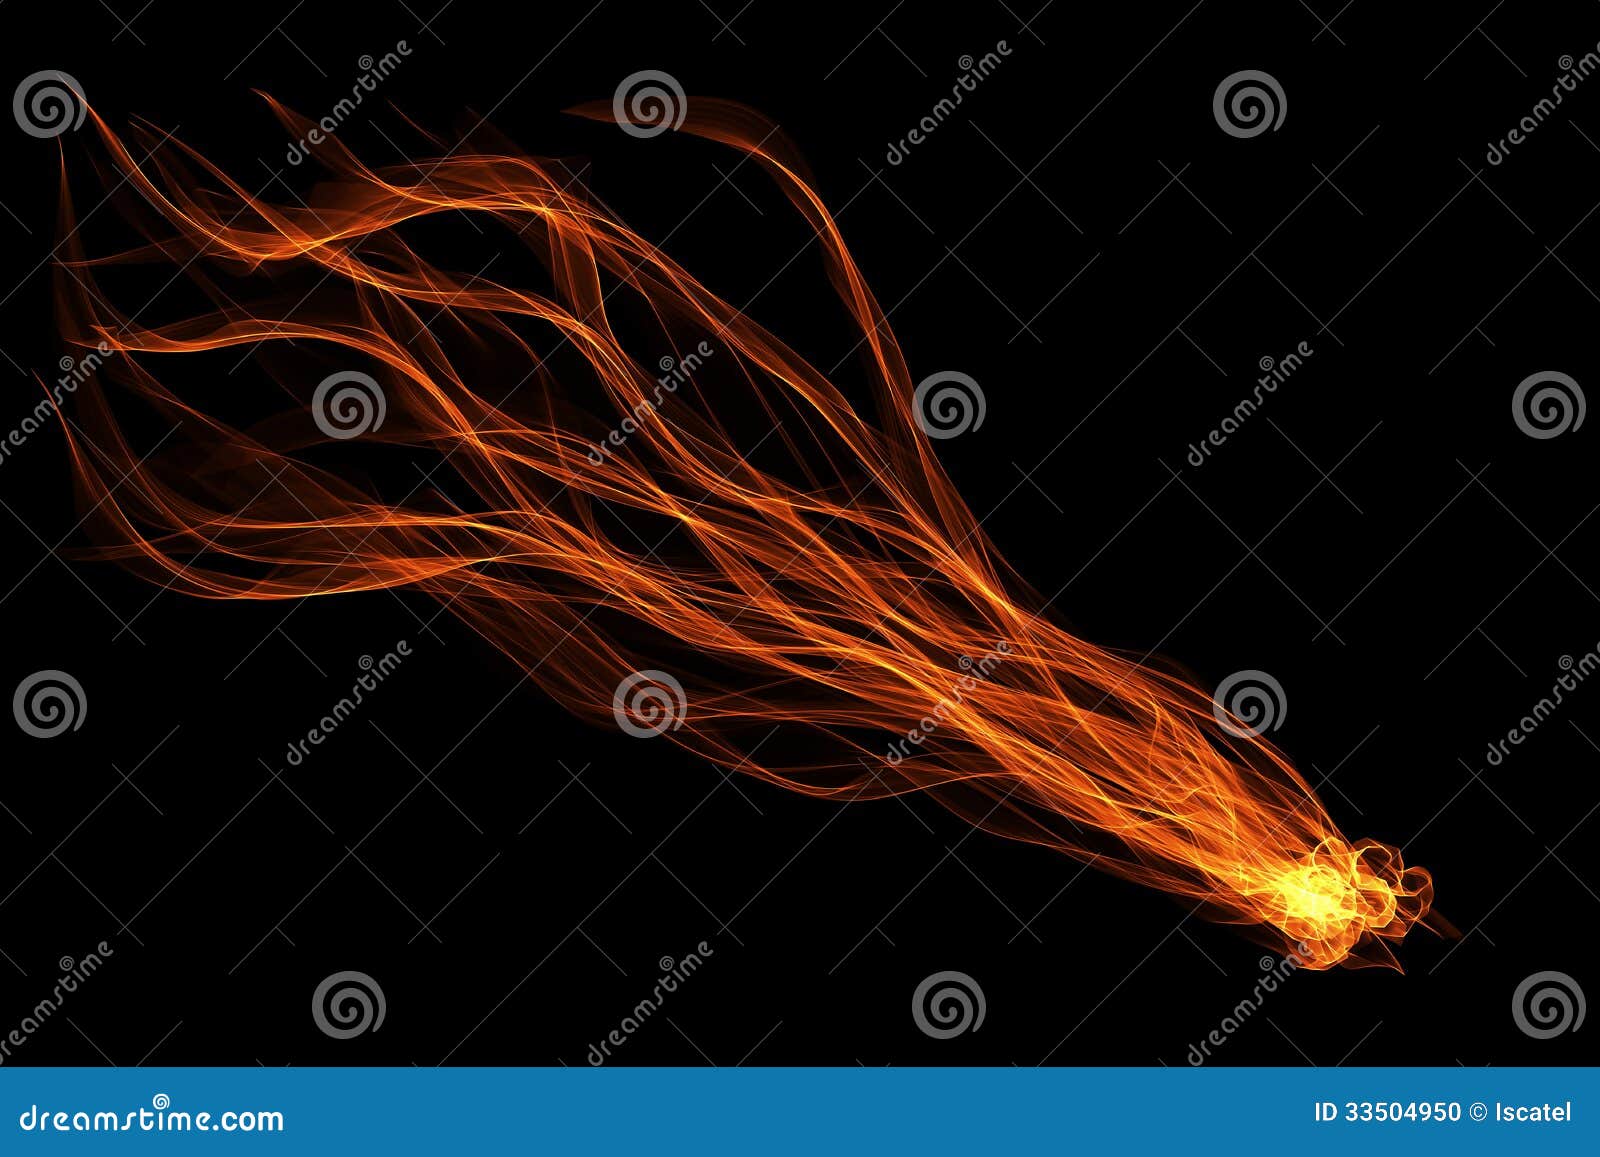 Abstract Ribbon Flame Stock Photo - Image: 33504950